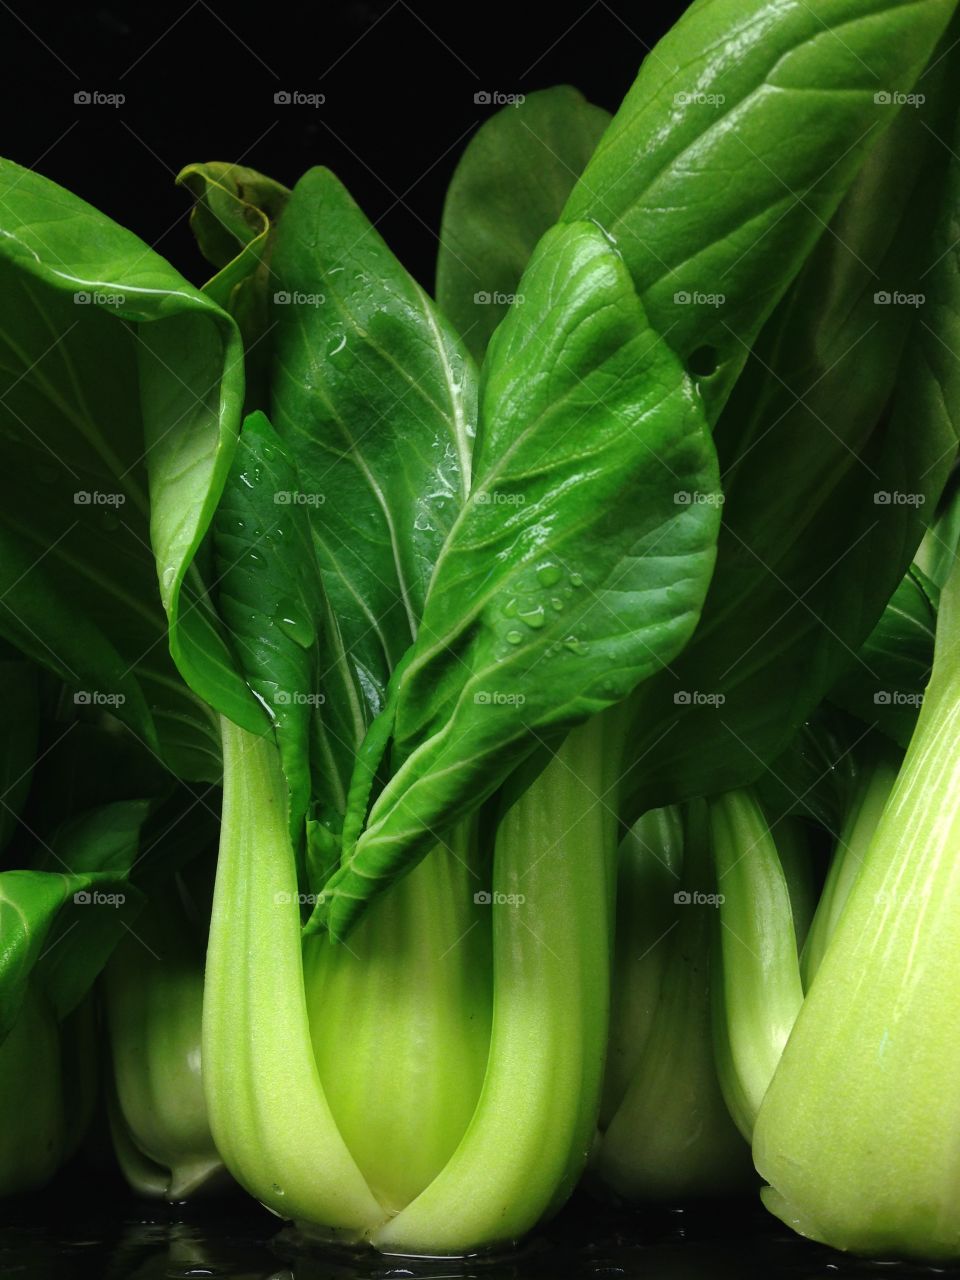 Water drops on green leaf vegetable